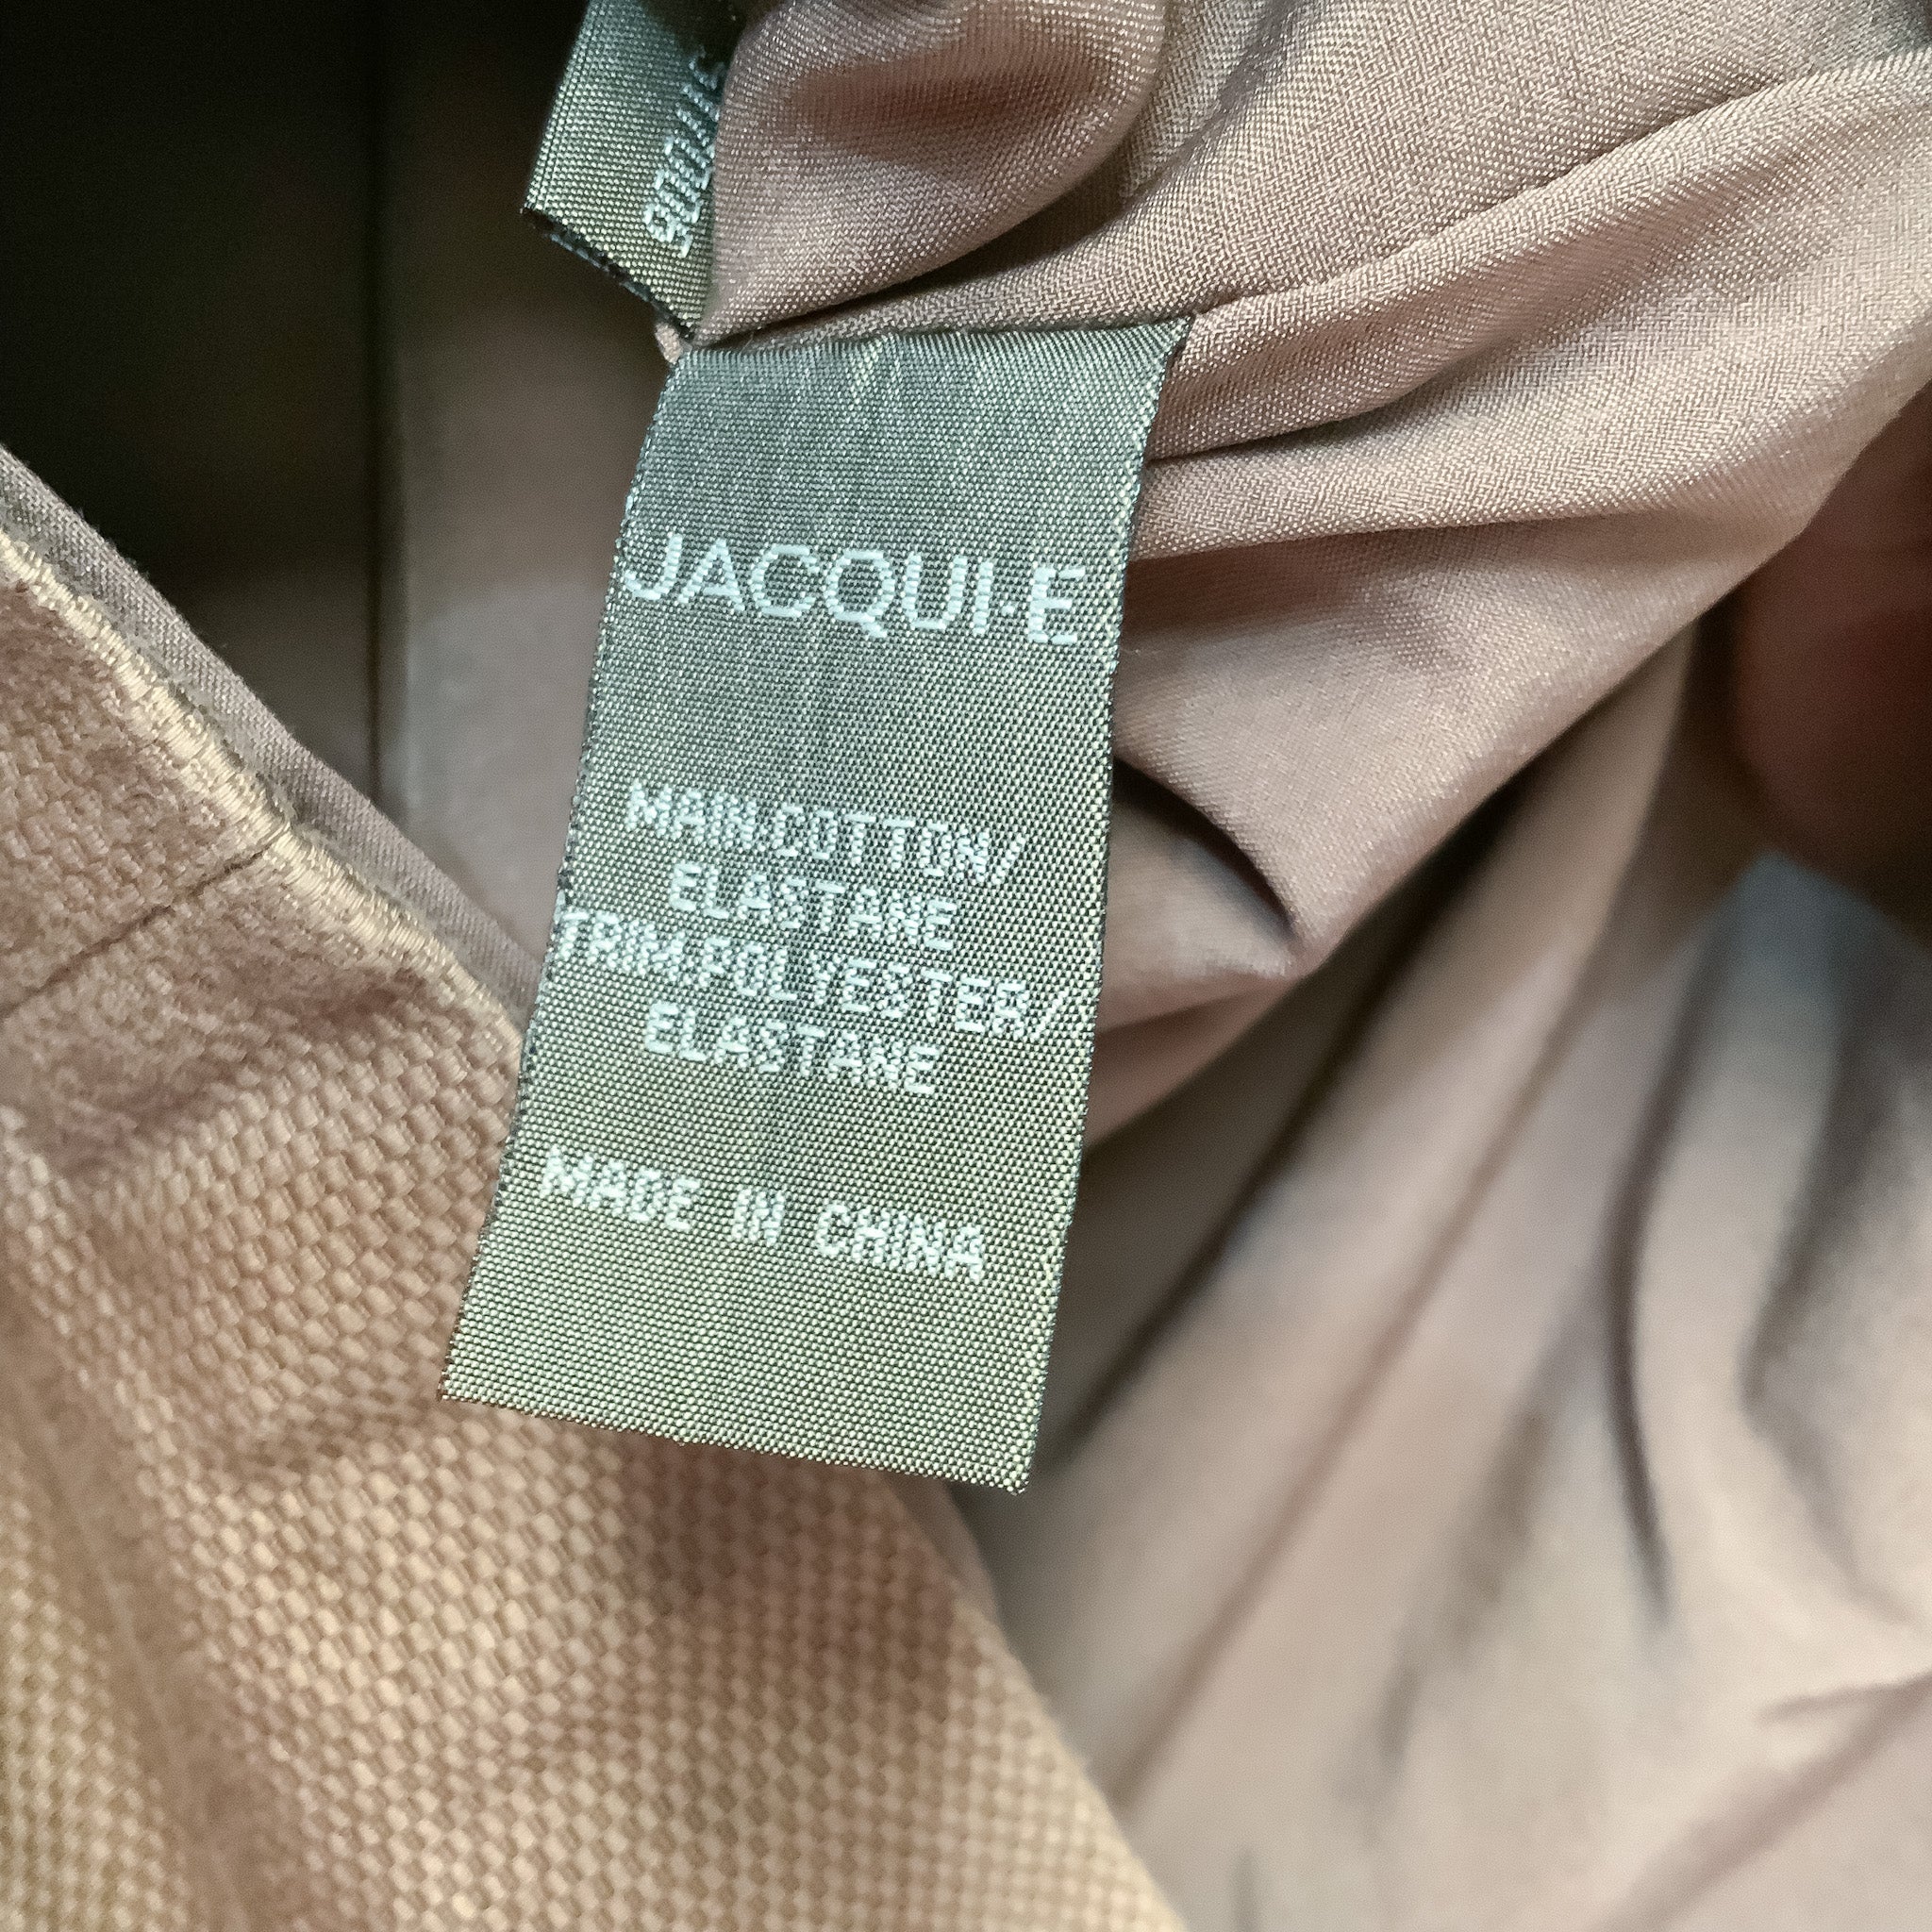 JACQUI E Ladies Tan Textured Pencil Skirt - Size 8